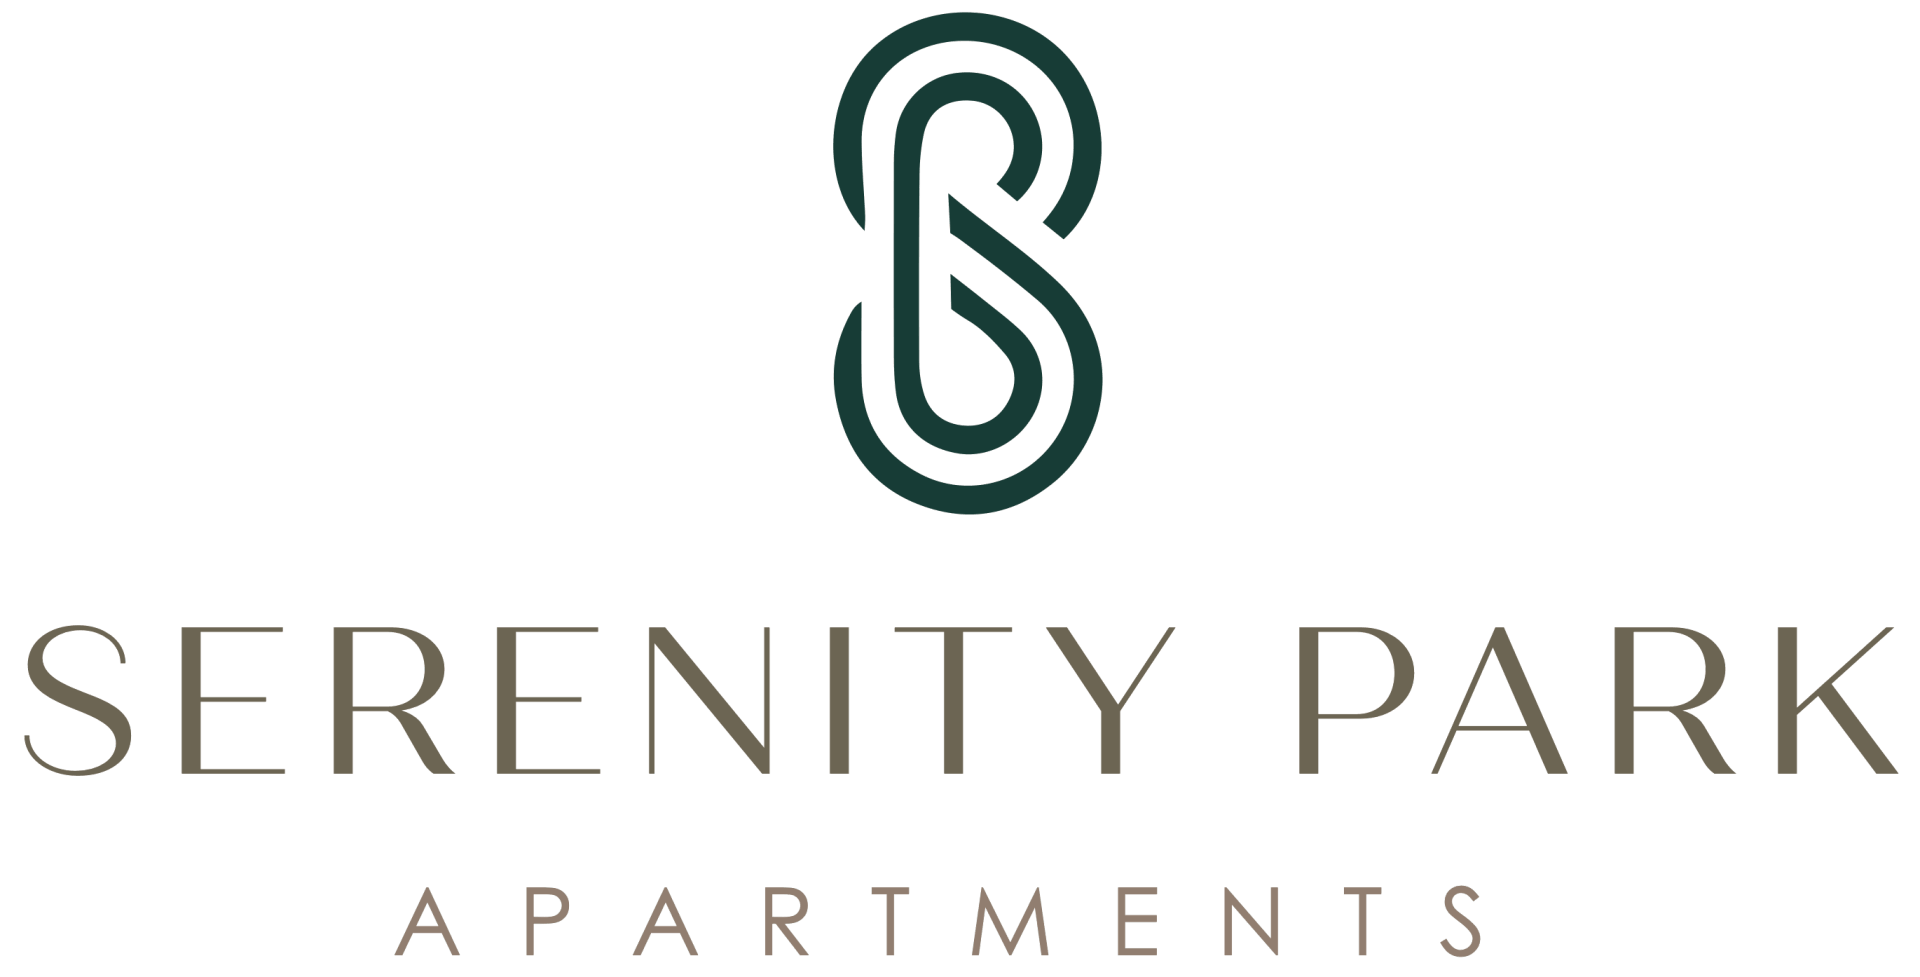 Serenity Park Apartments logo